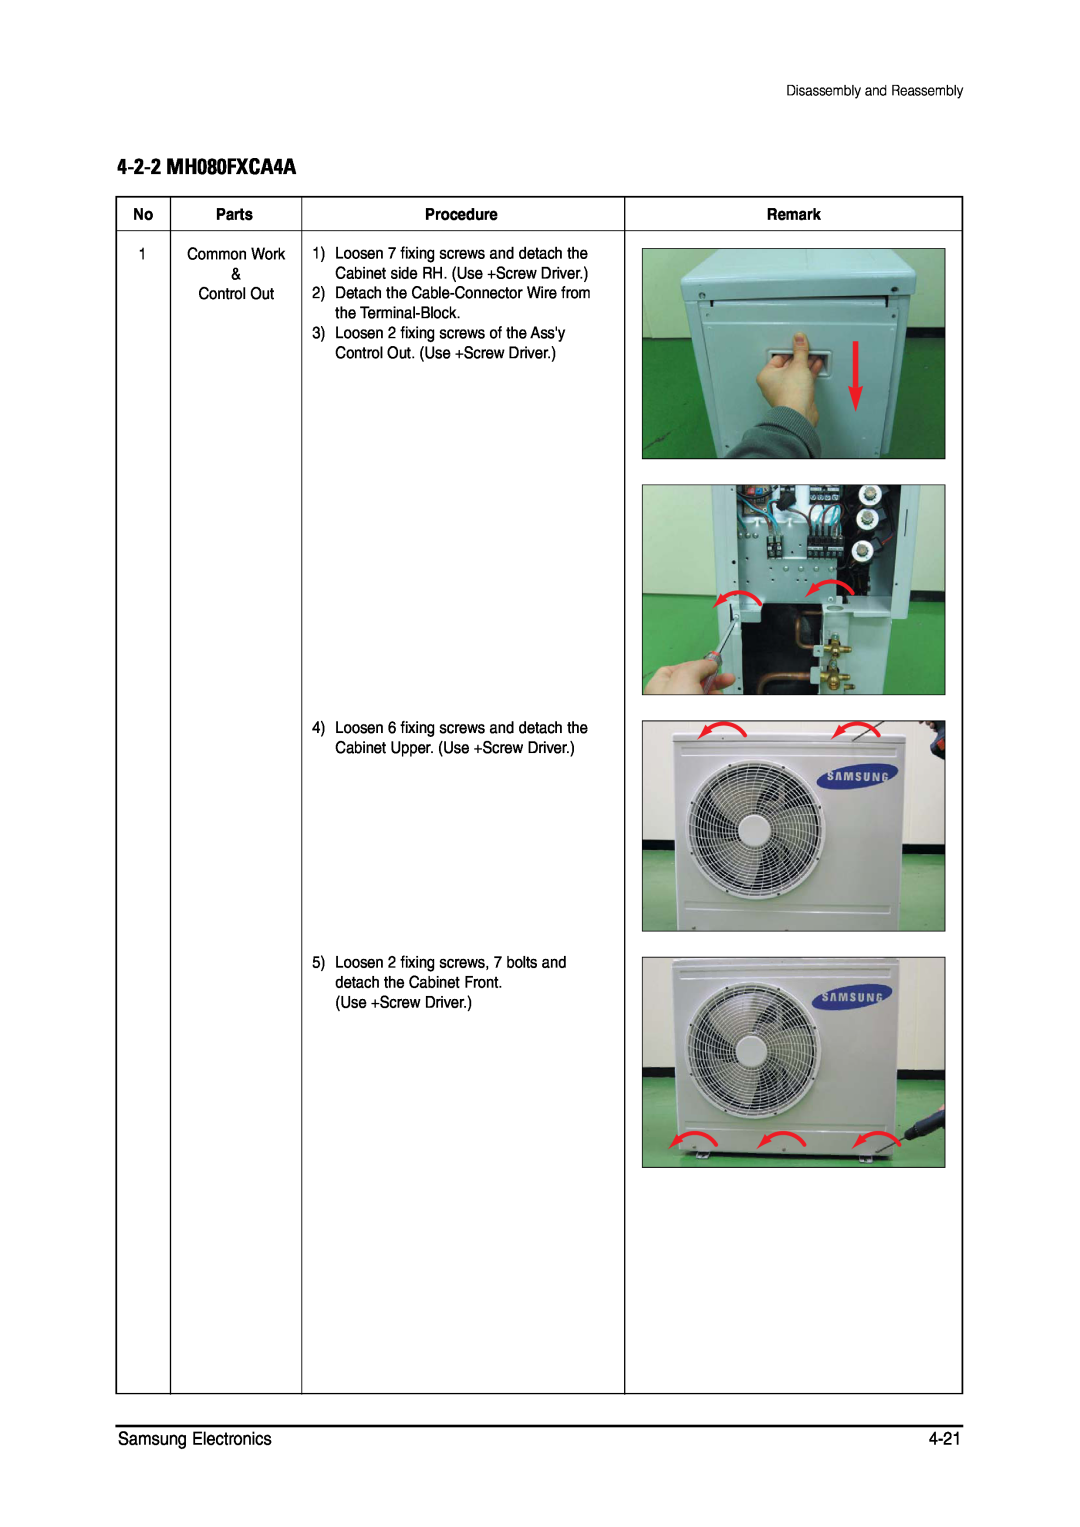 Samsung MH026FNCA service manual 4-2-2MH080FXCA4A, Samsung Electronics, 4-21, Procedure, Remark 